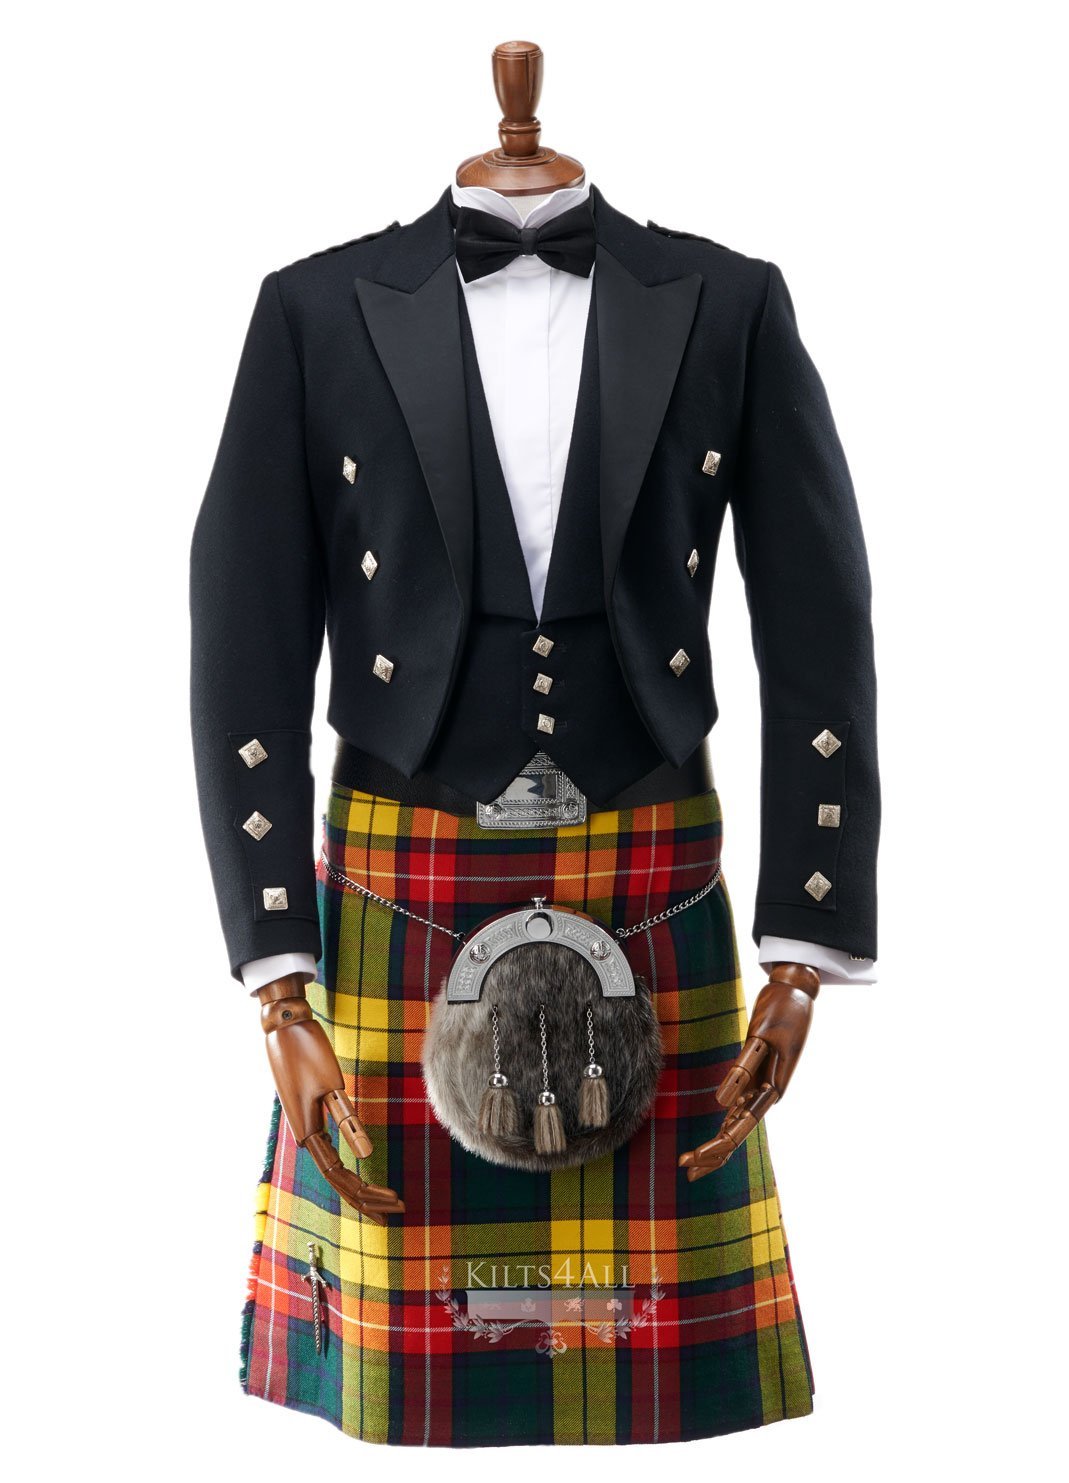 Mens Scottish Tartan Kilt Outfit to Hire - Prince Charlie Jacket & 3 Button Waistcoat